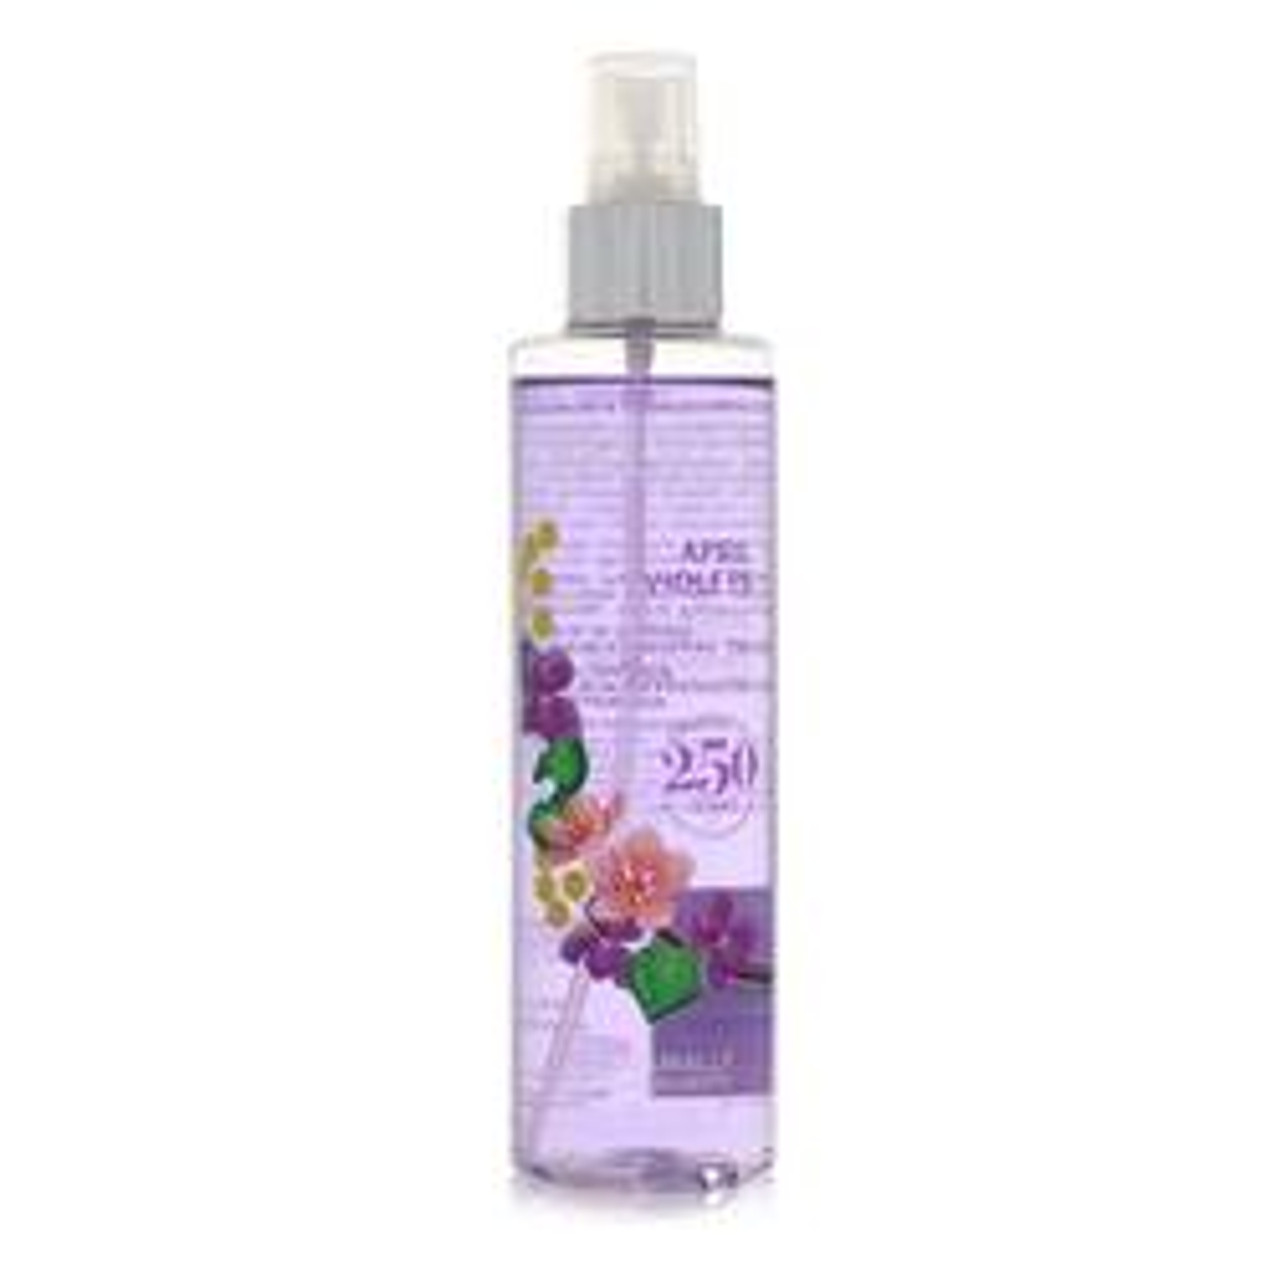 April Violets Perfume By Yardley London Body Mist 6.8 oz for Women - *Pre-Order